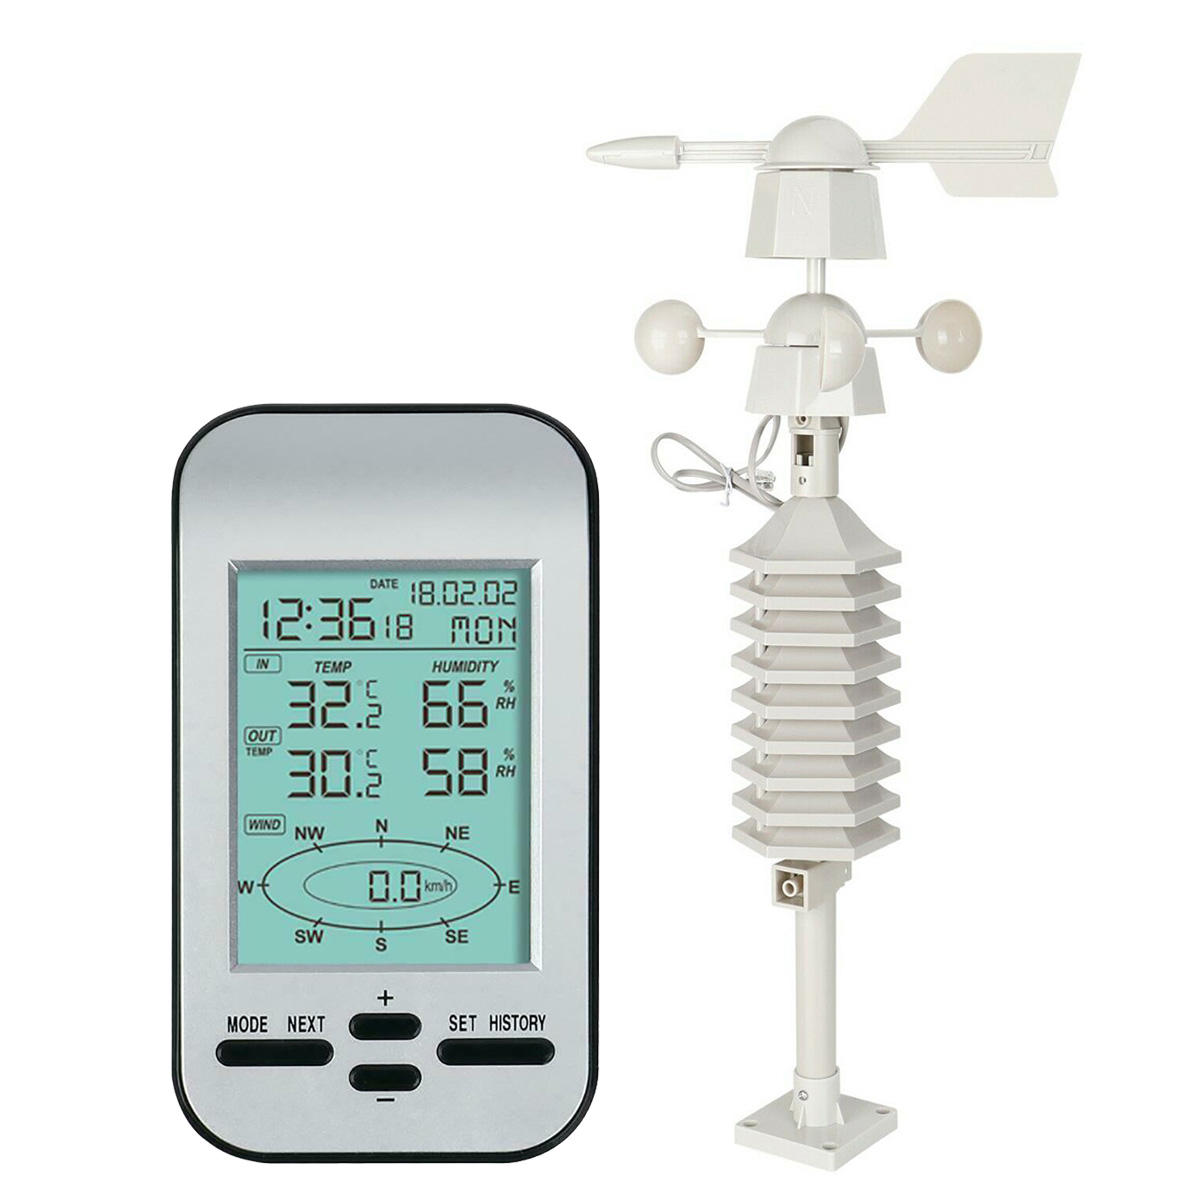 RF 433mhz Wireless Weather Station Clock Wind Speed Direction Temperature Sensor